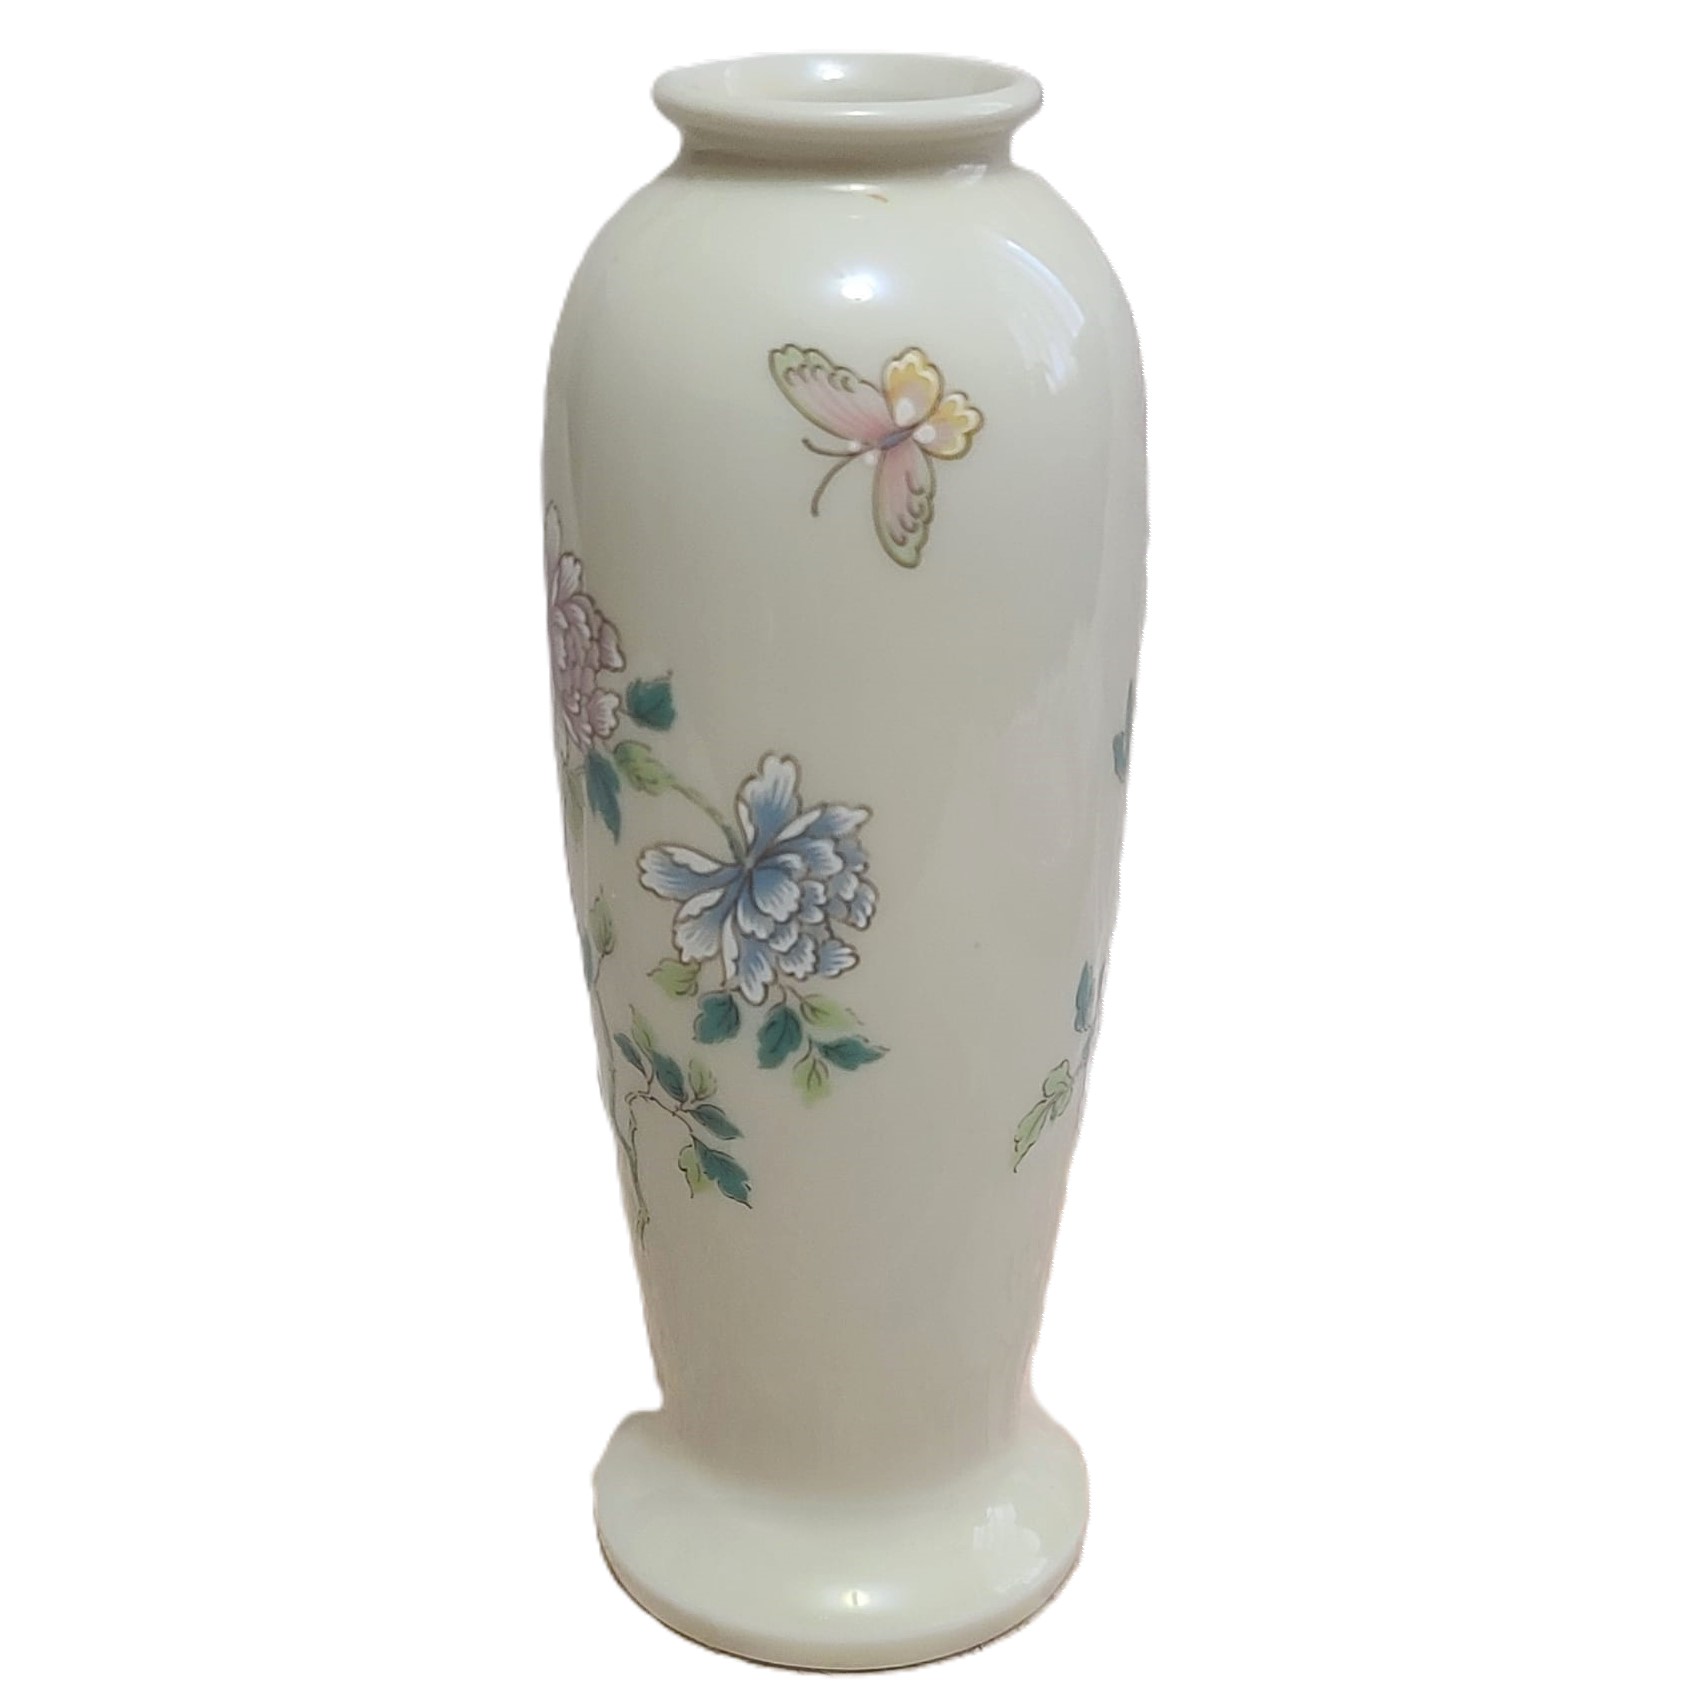 Cho Cho Sanfransico floral bud vase